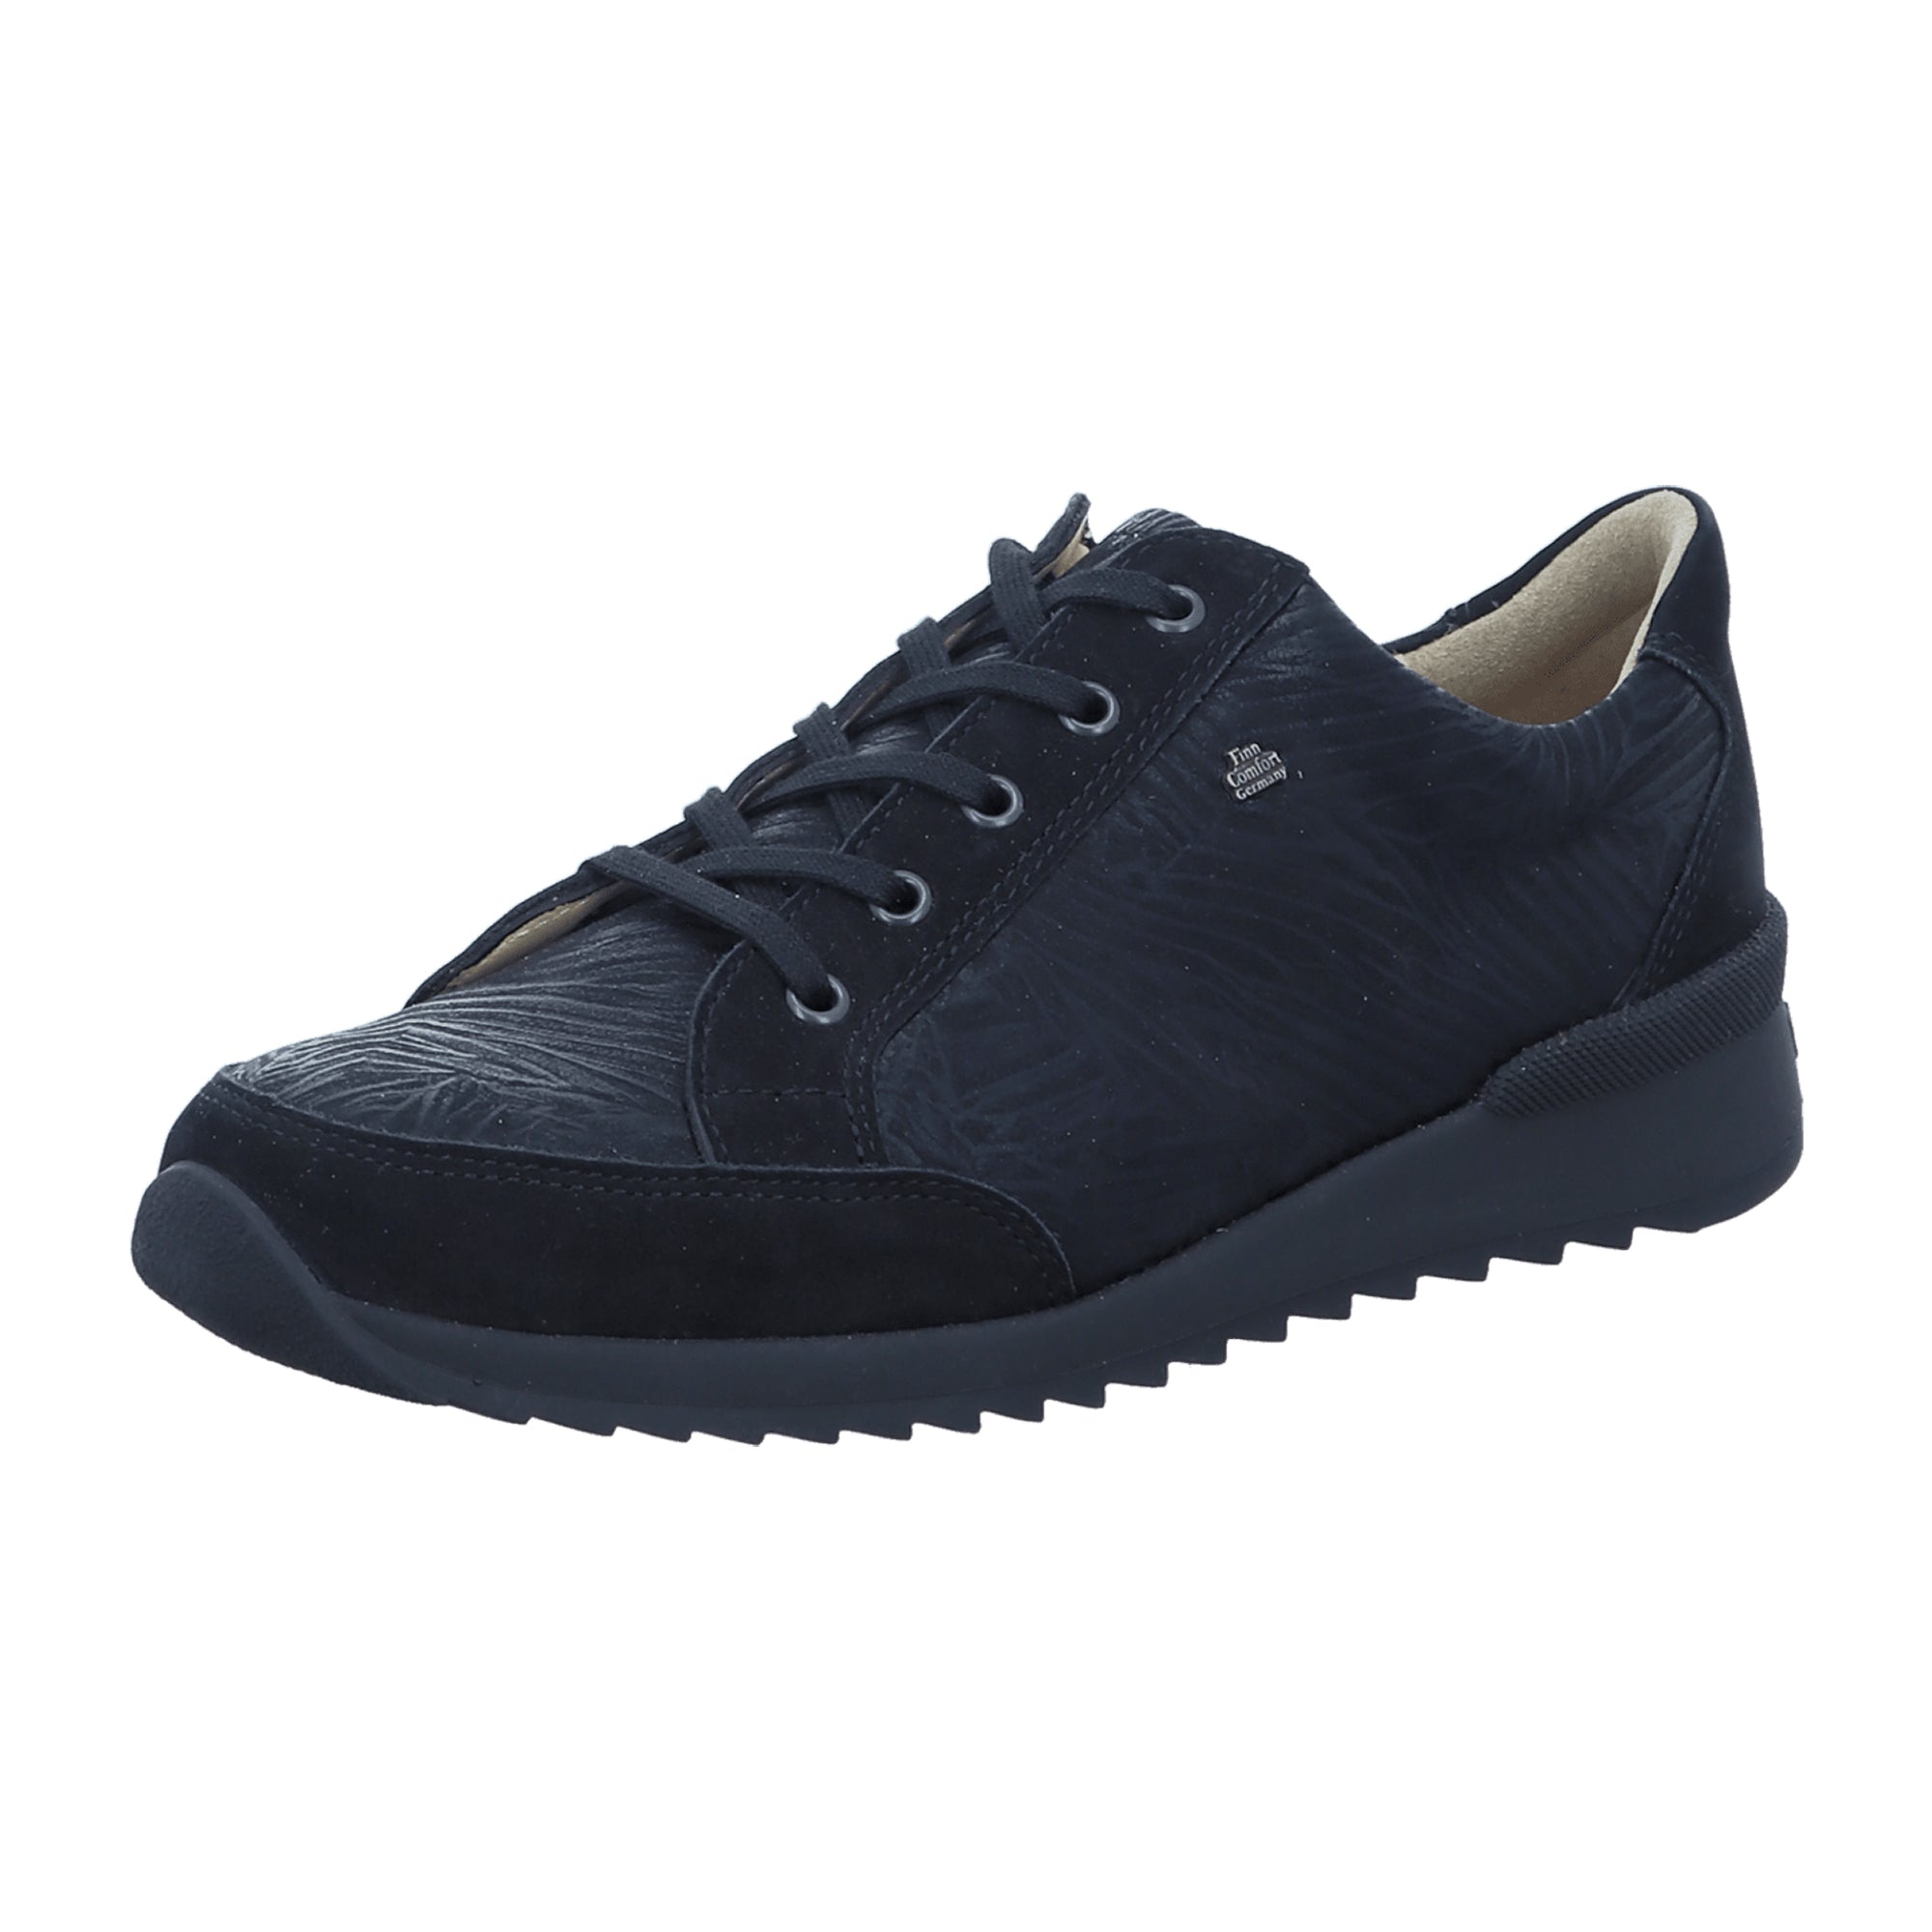 Finn Comfort Pordenone Women's Stylish Black Comfort Shoes